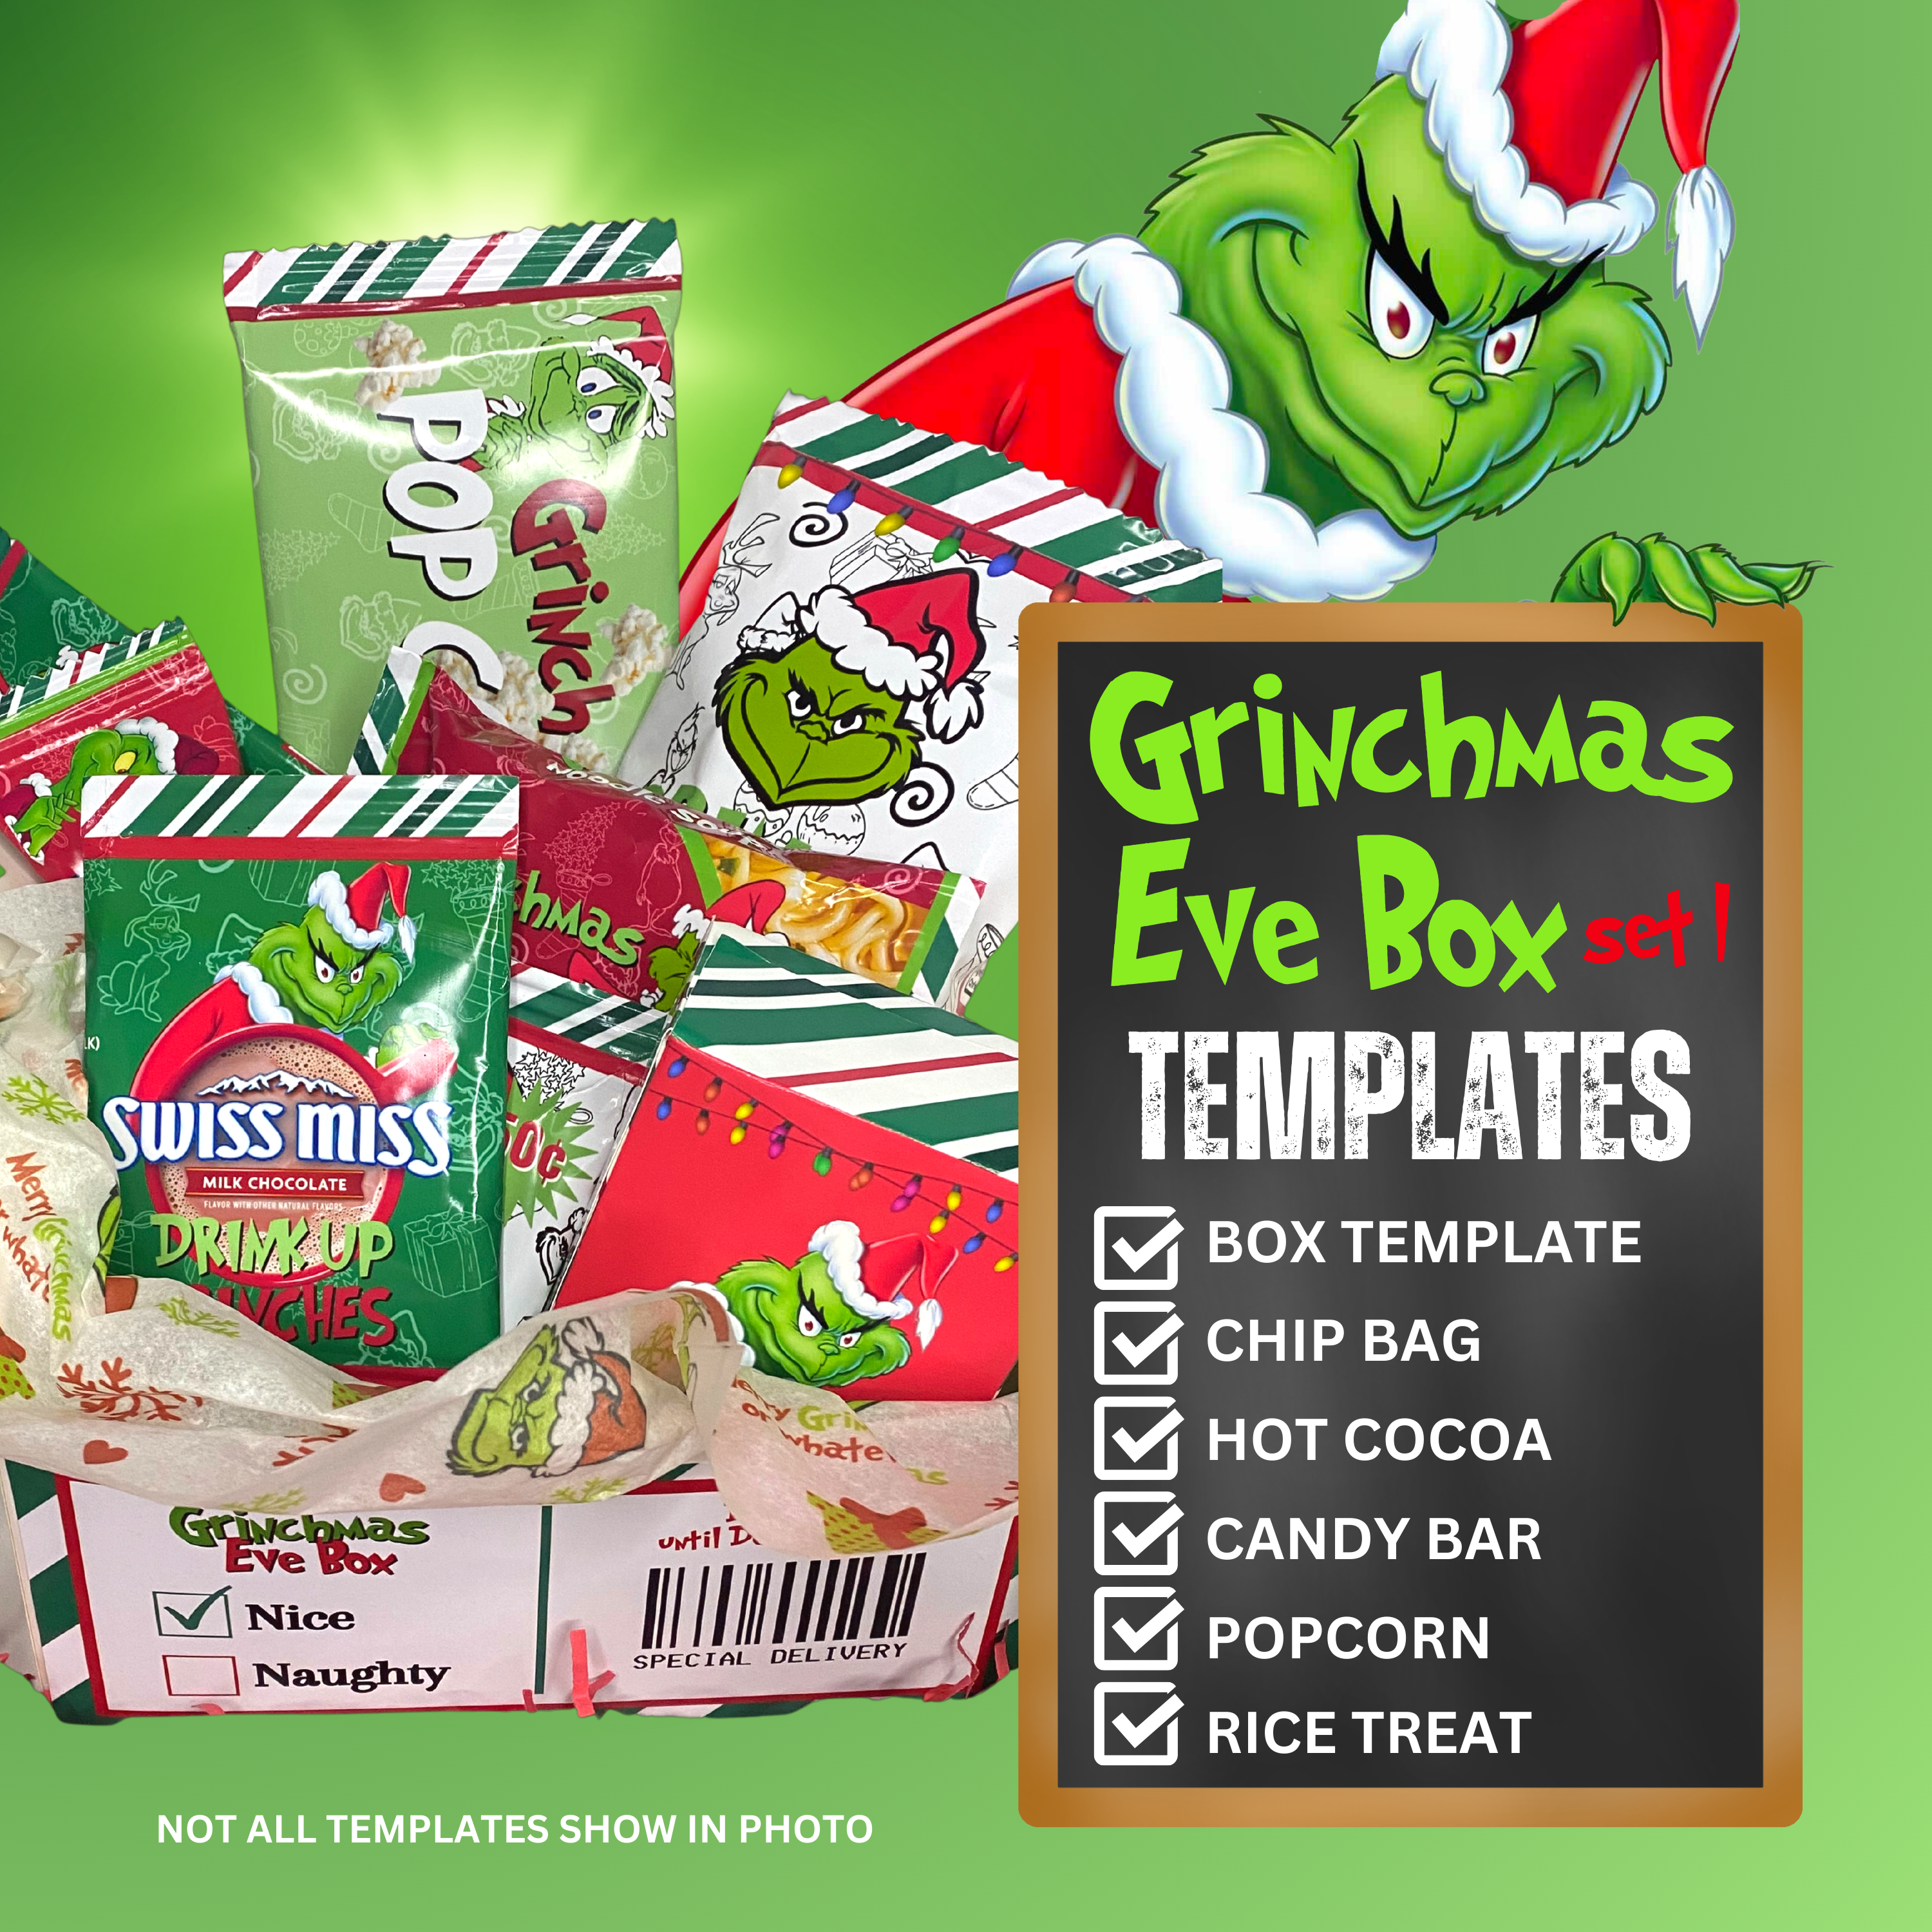 Grinchmas Eve Box Templates Set 1